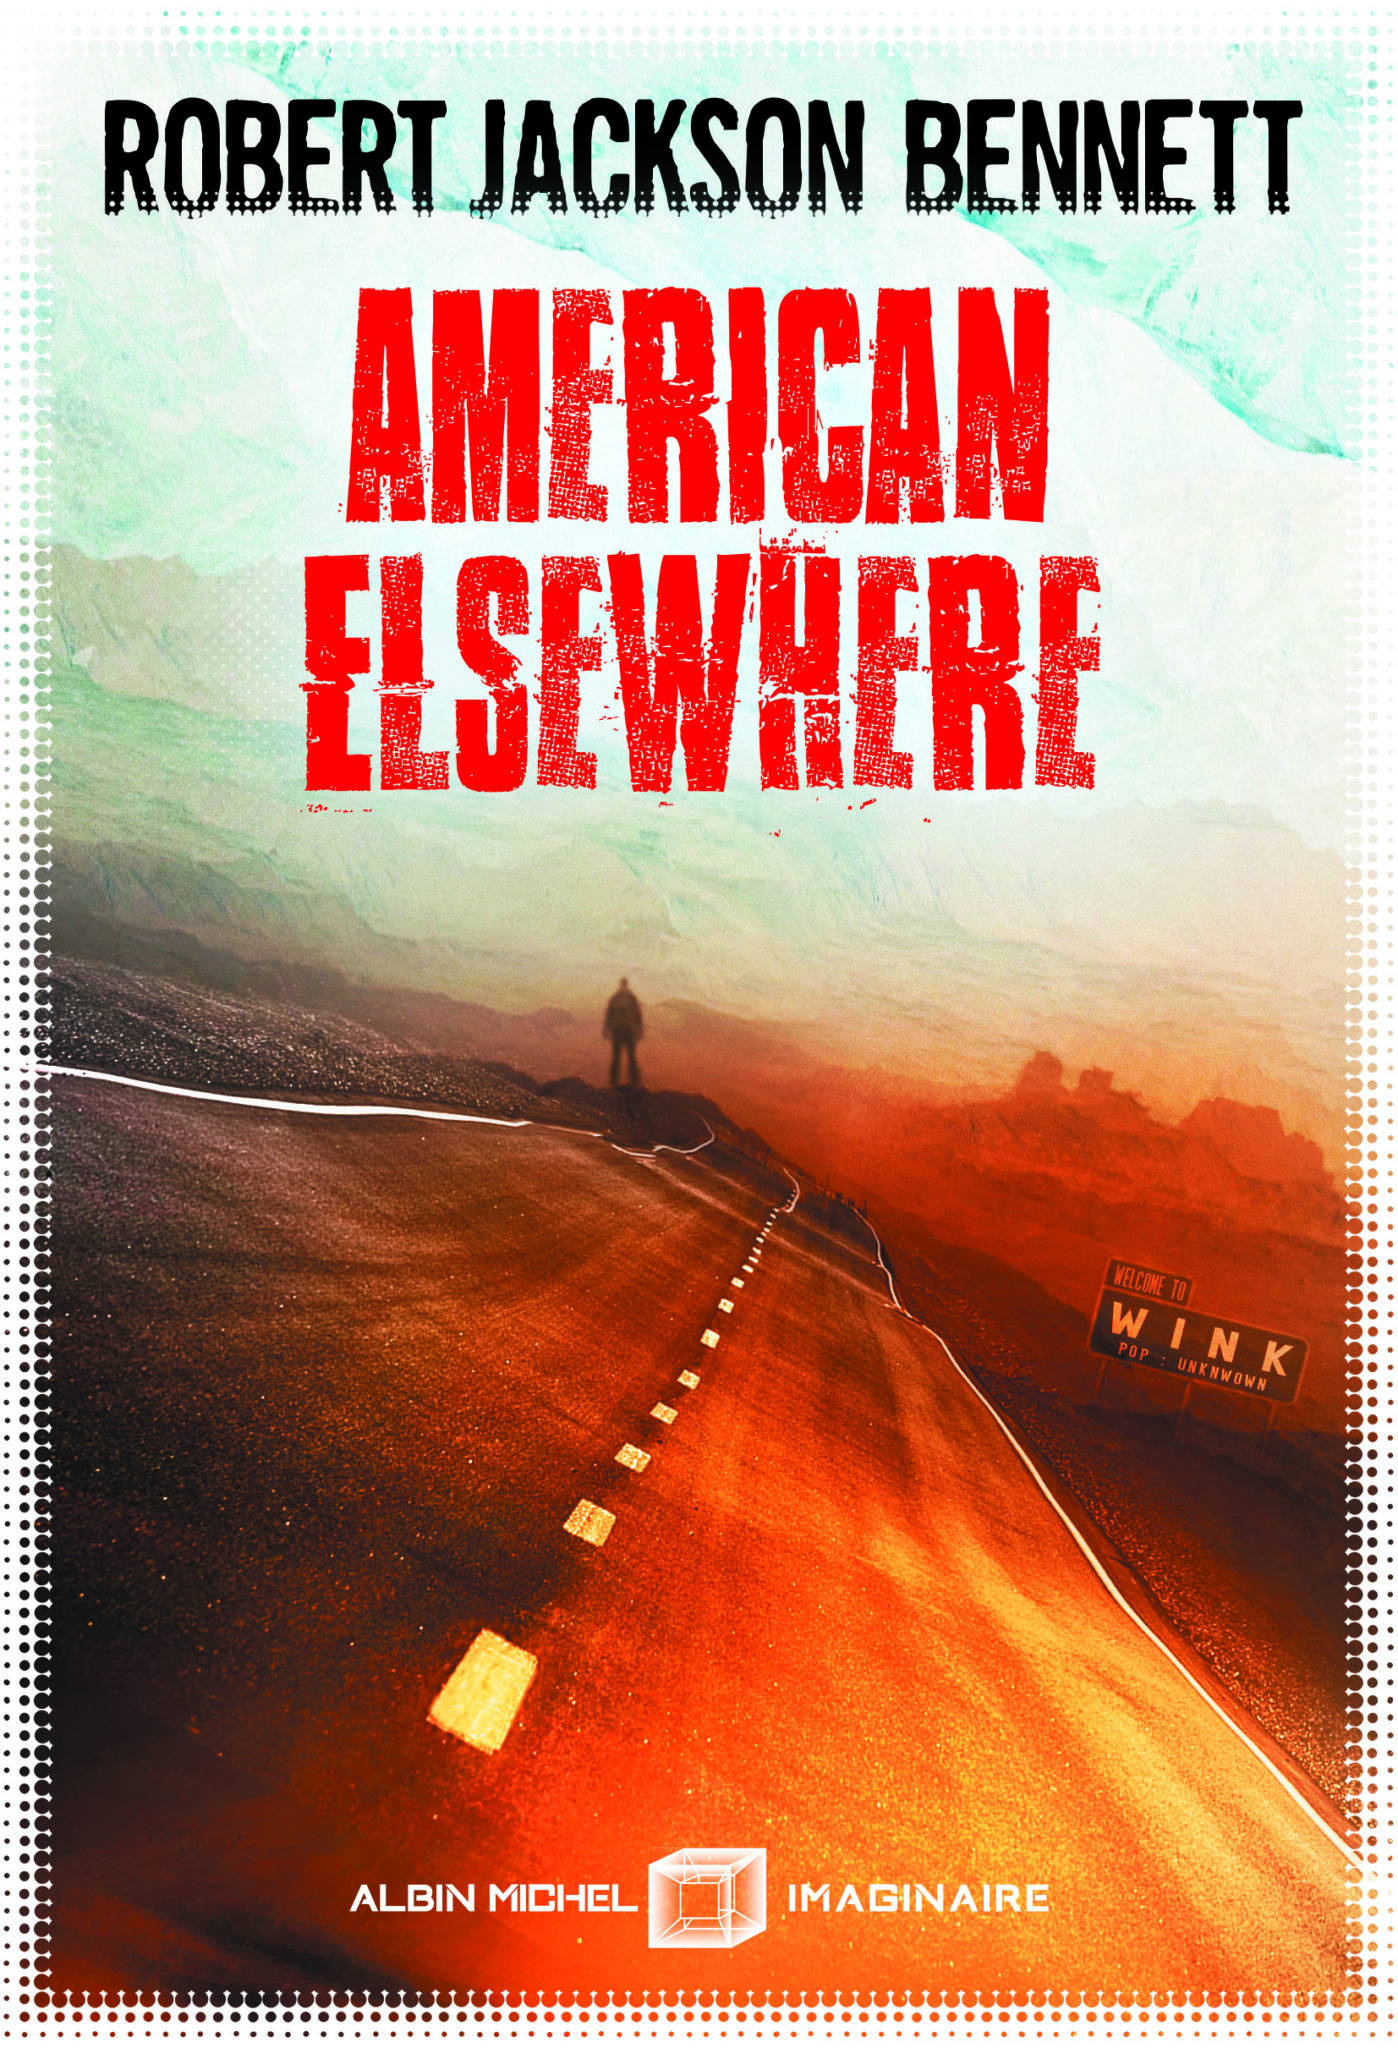 American Elsewhere de Robert Jackson Bennett